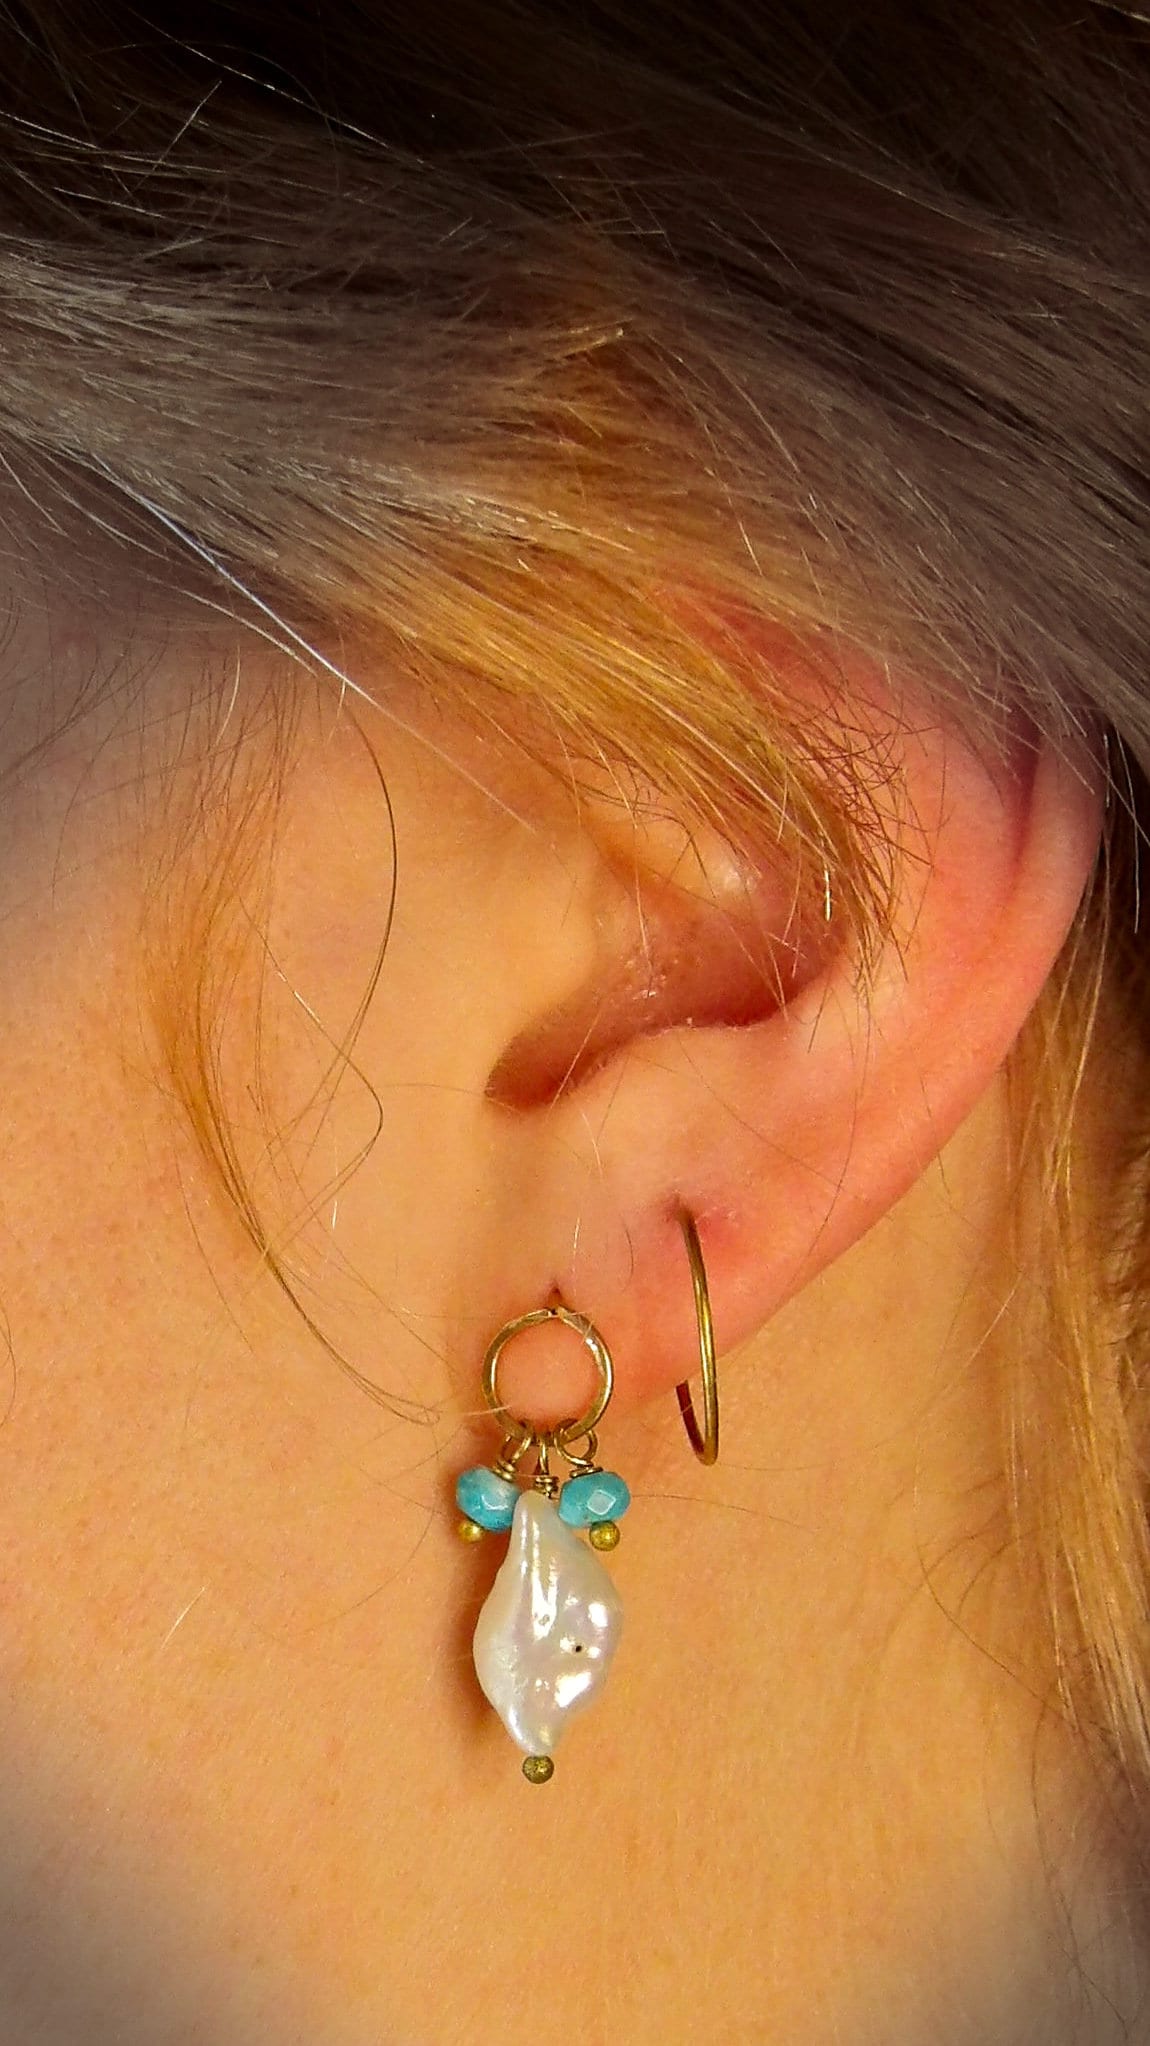 Genuine Nacozari Turquoise Stud Earrings | Keshi Pearl Earrings | Ethical Bohemian Jewelry | Intentional Jewelry | USA Made Artisan Jewelry